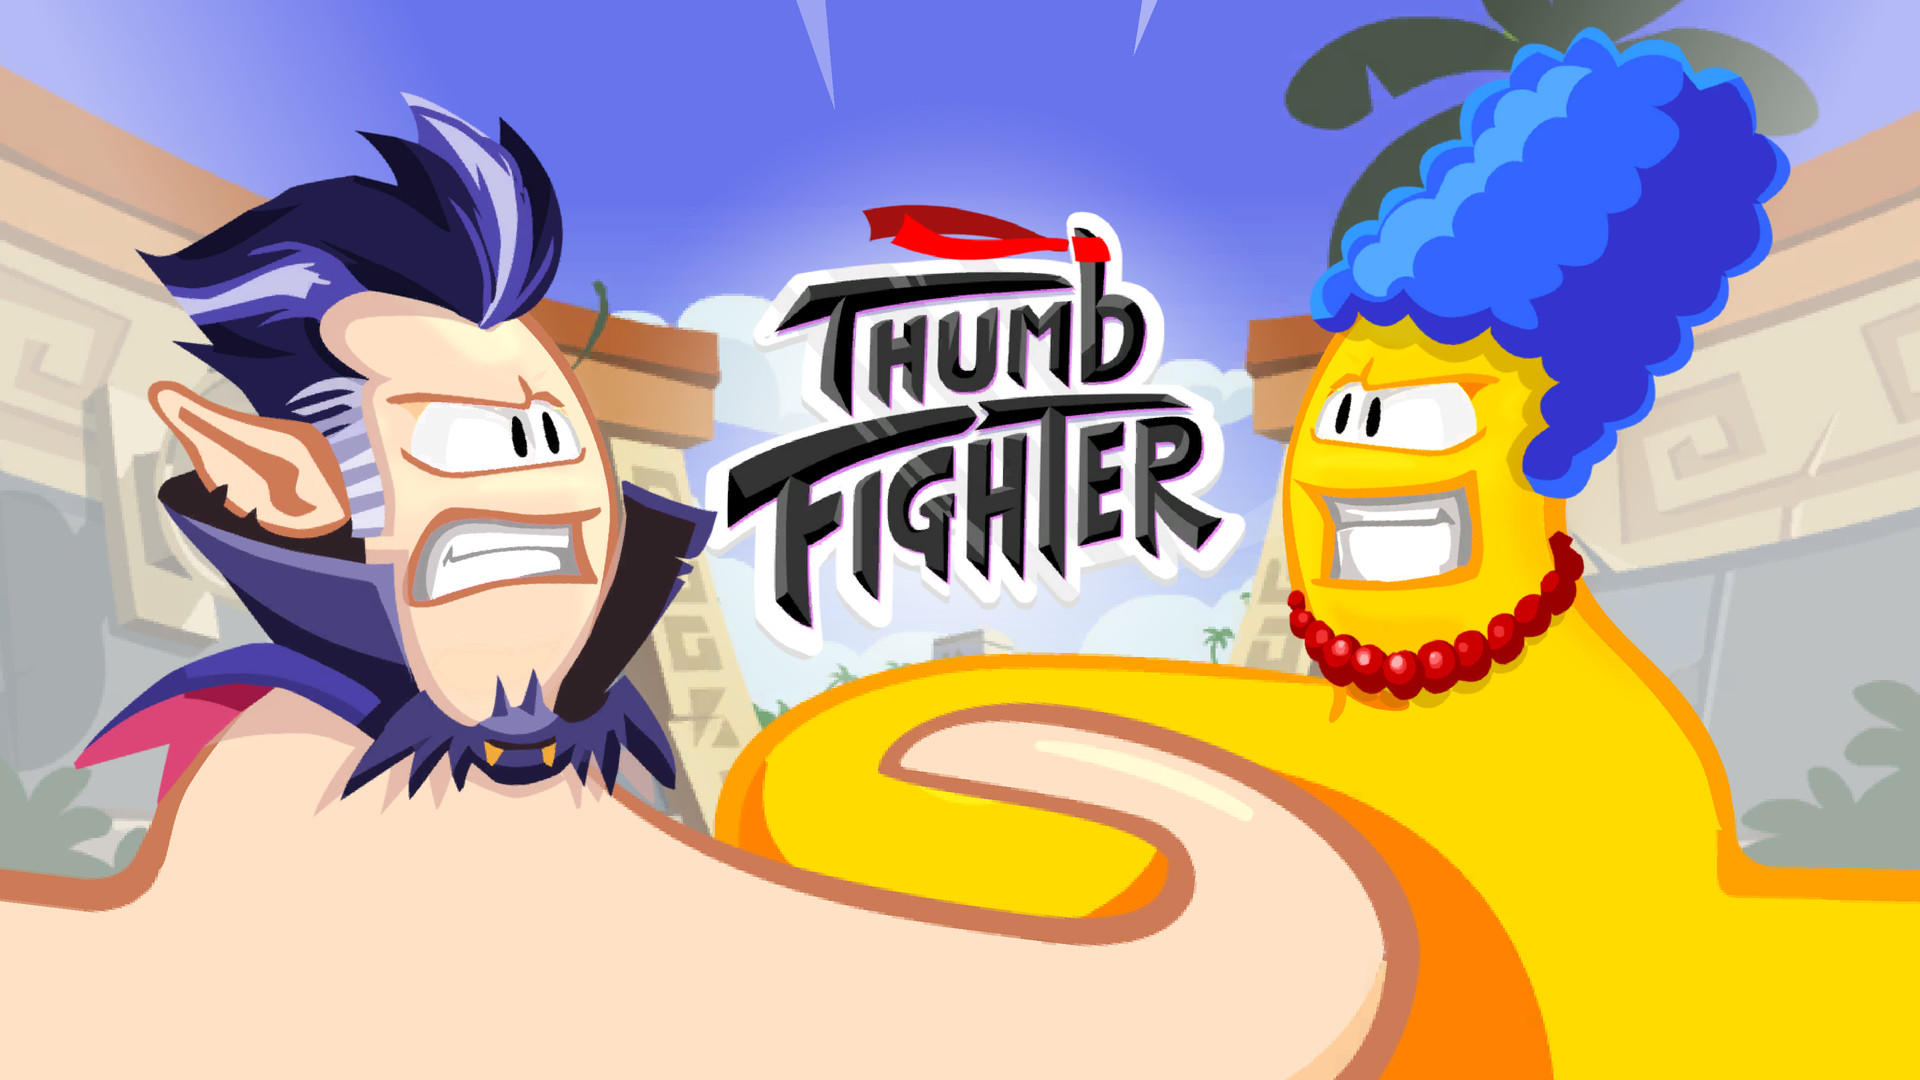 Thumb Fighter 게임 스크린 샷